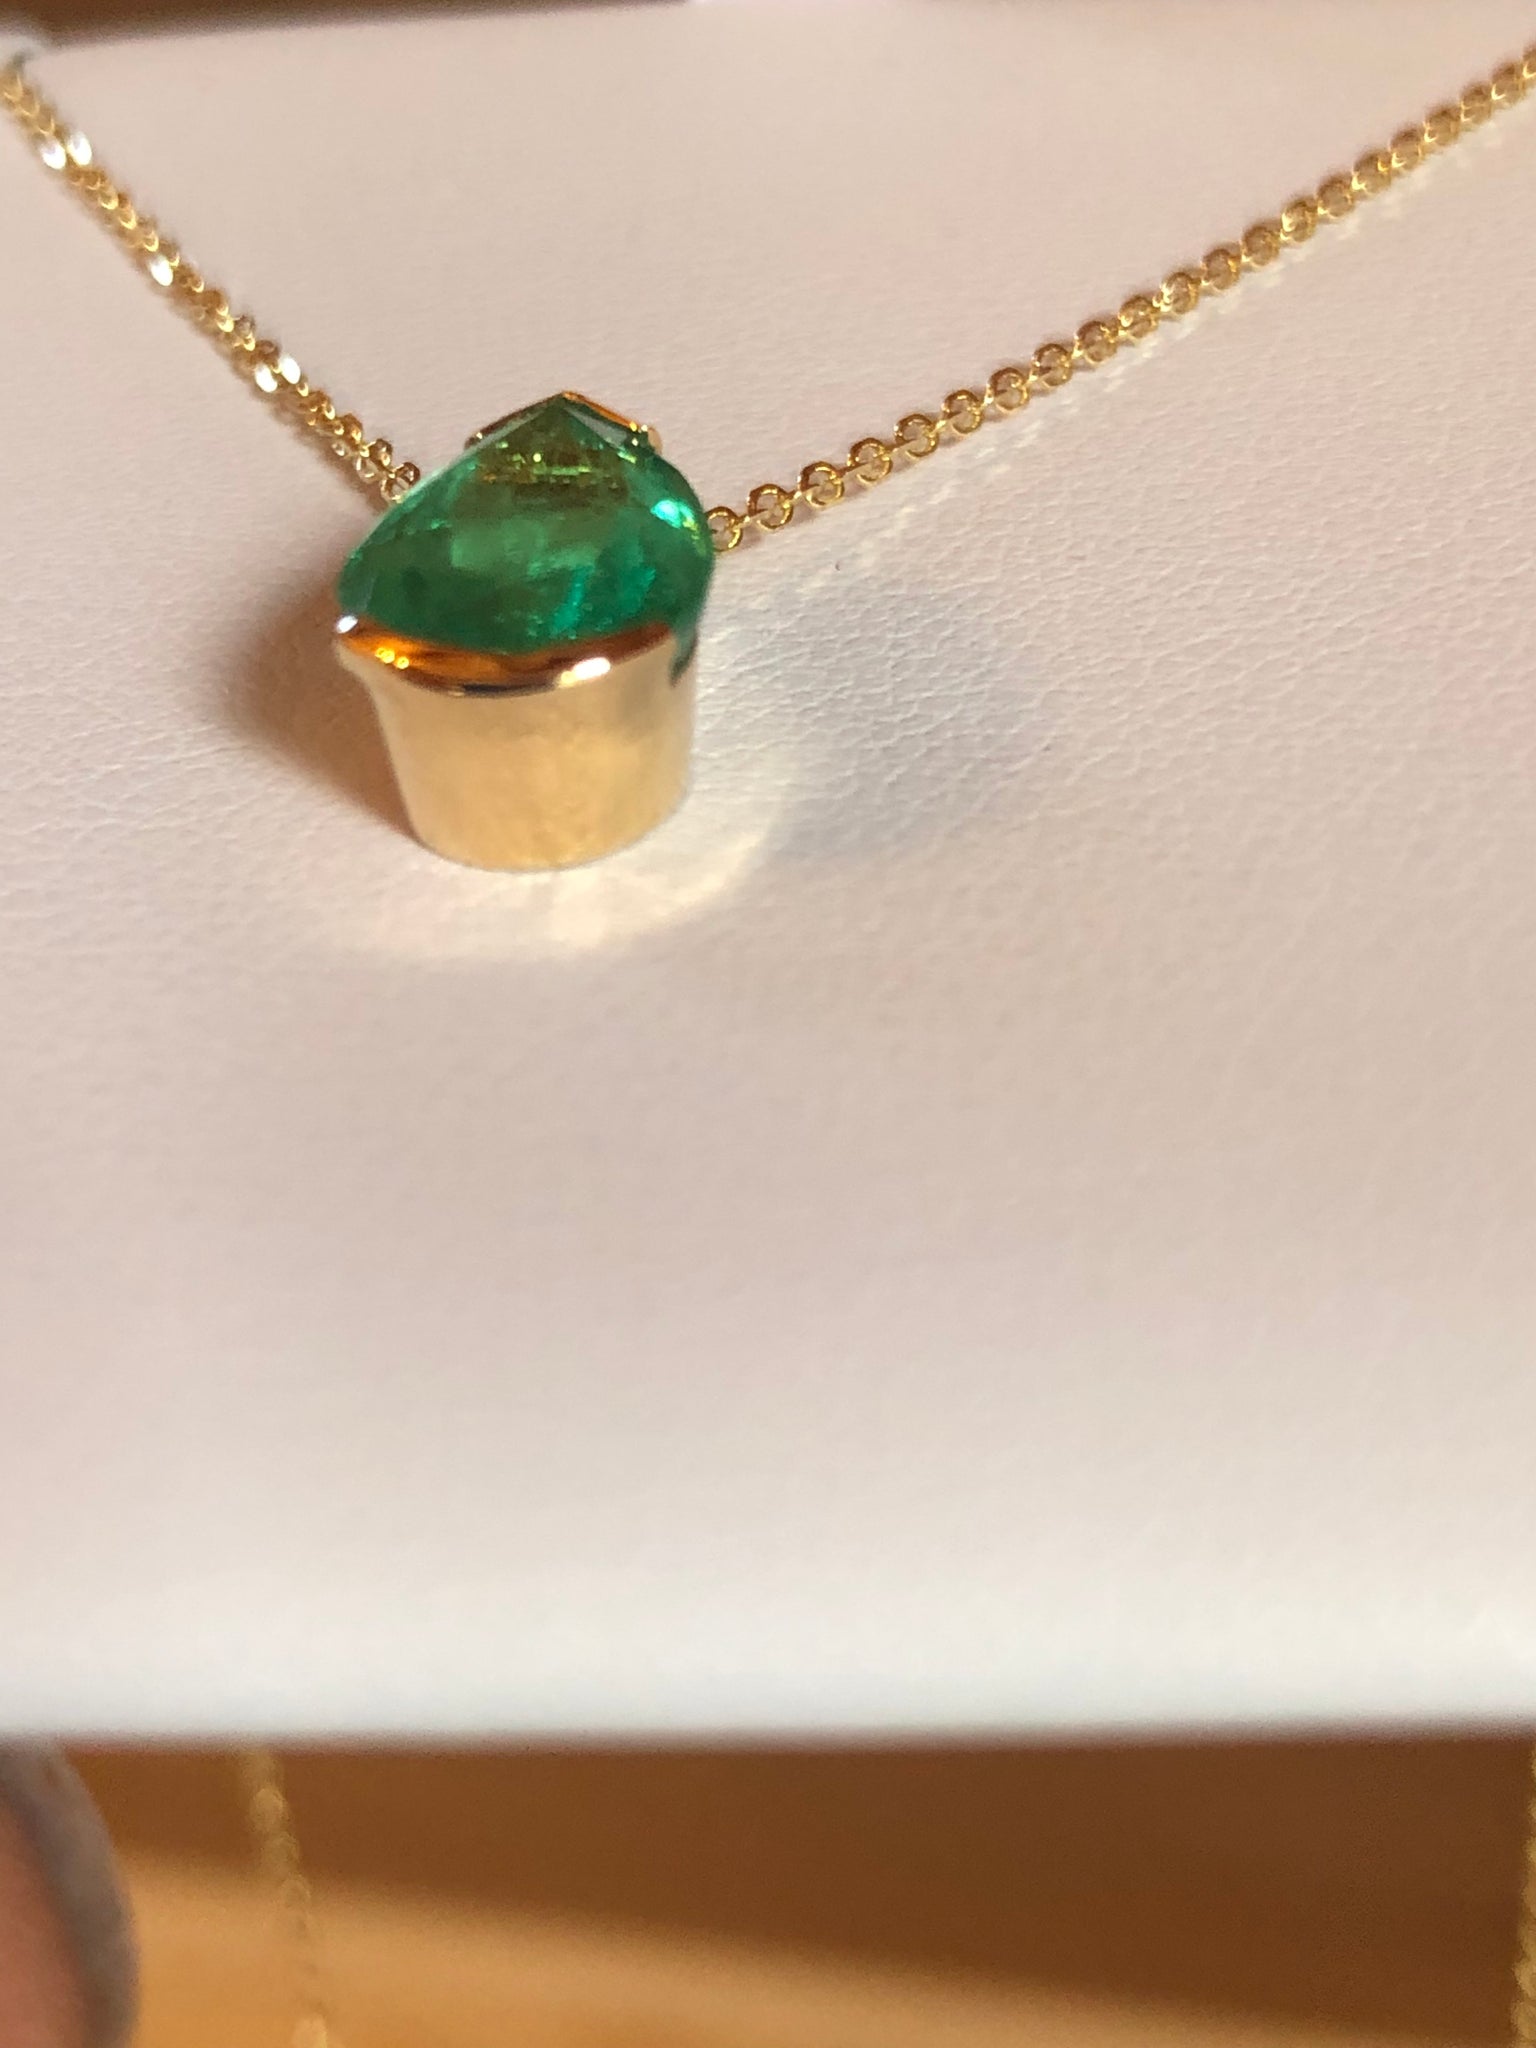 Colombian Emerald 3.00 Carat Pear Drop Pendant Necklace 18K Gold